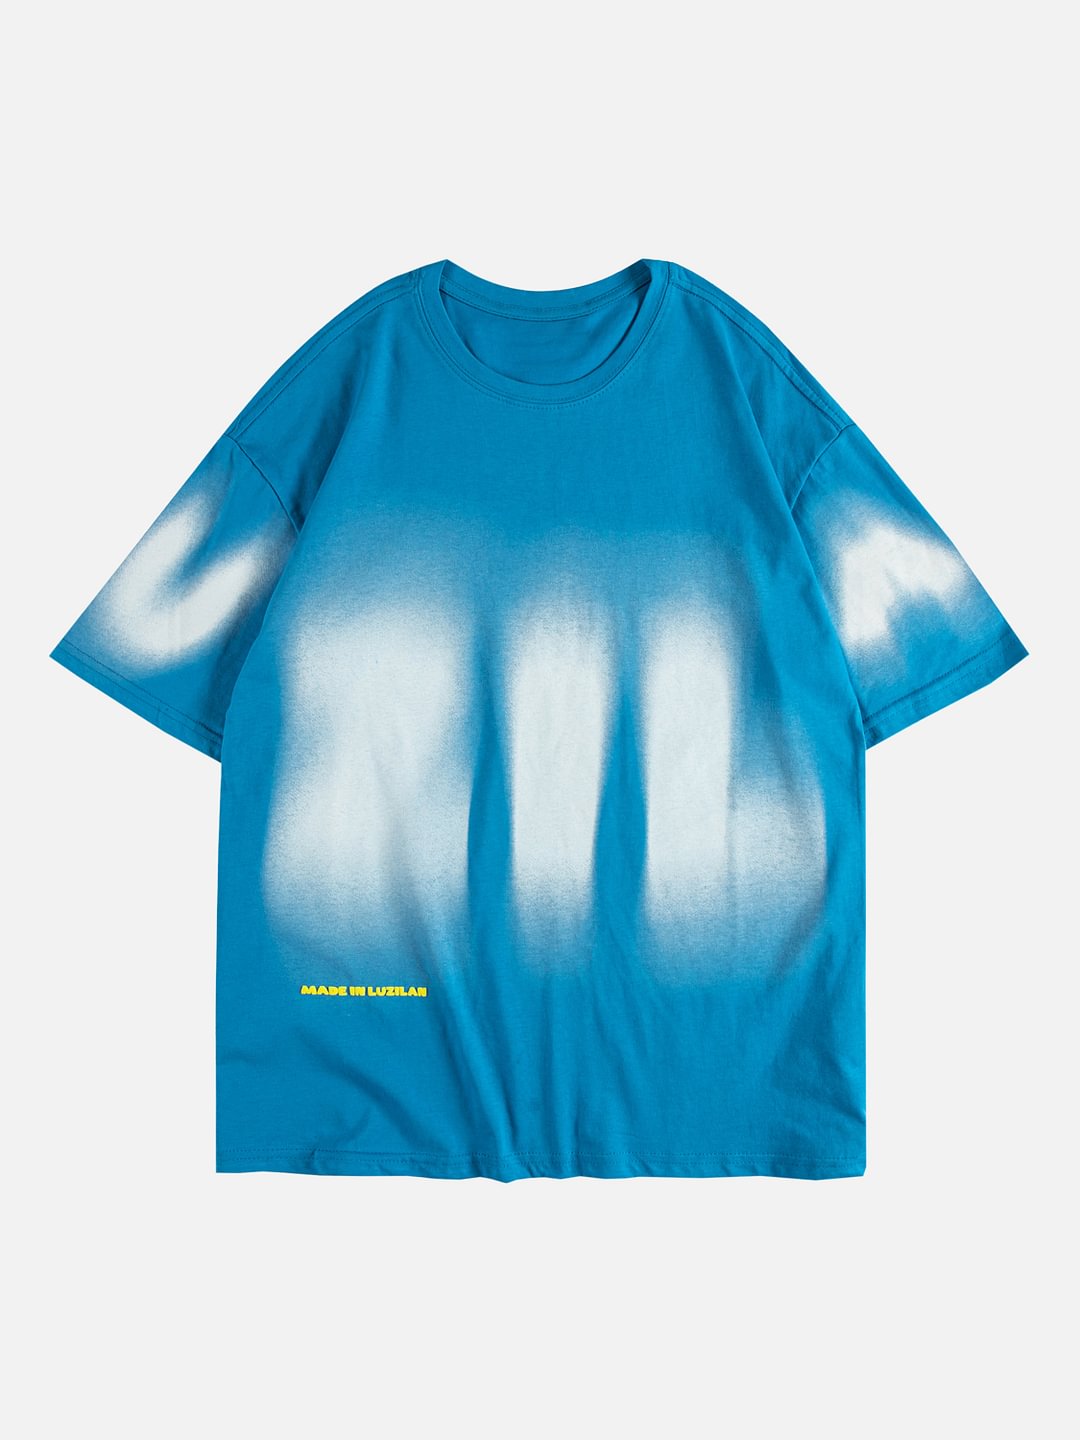 Hang-dye Print T-shirt / Techwear Club / Techwear